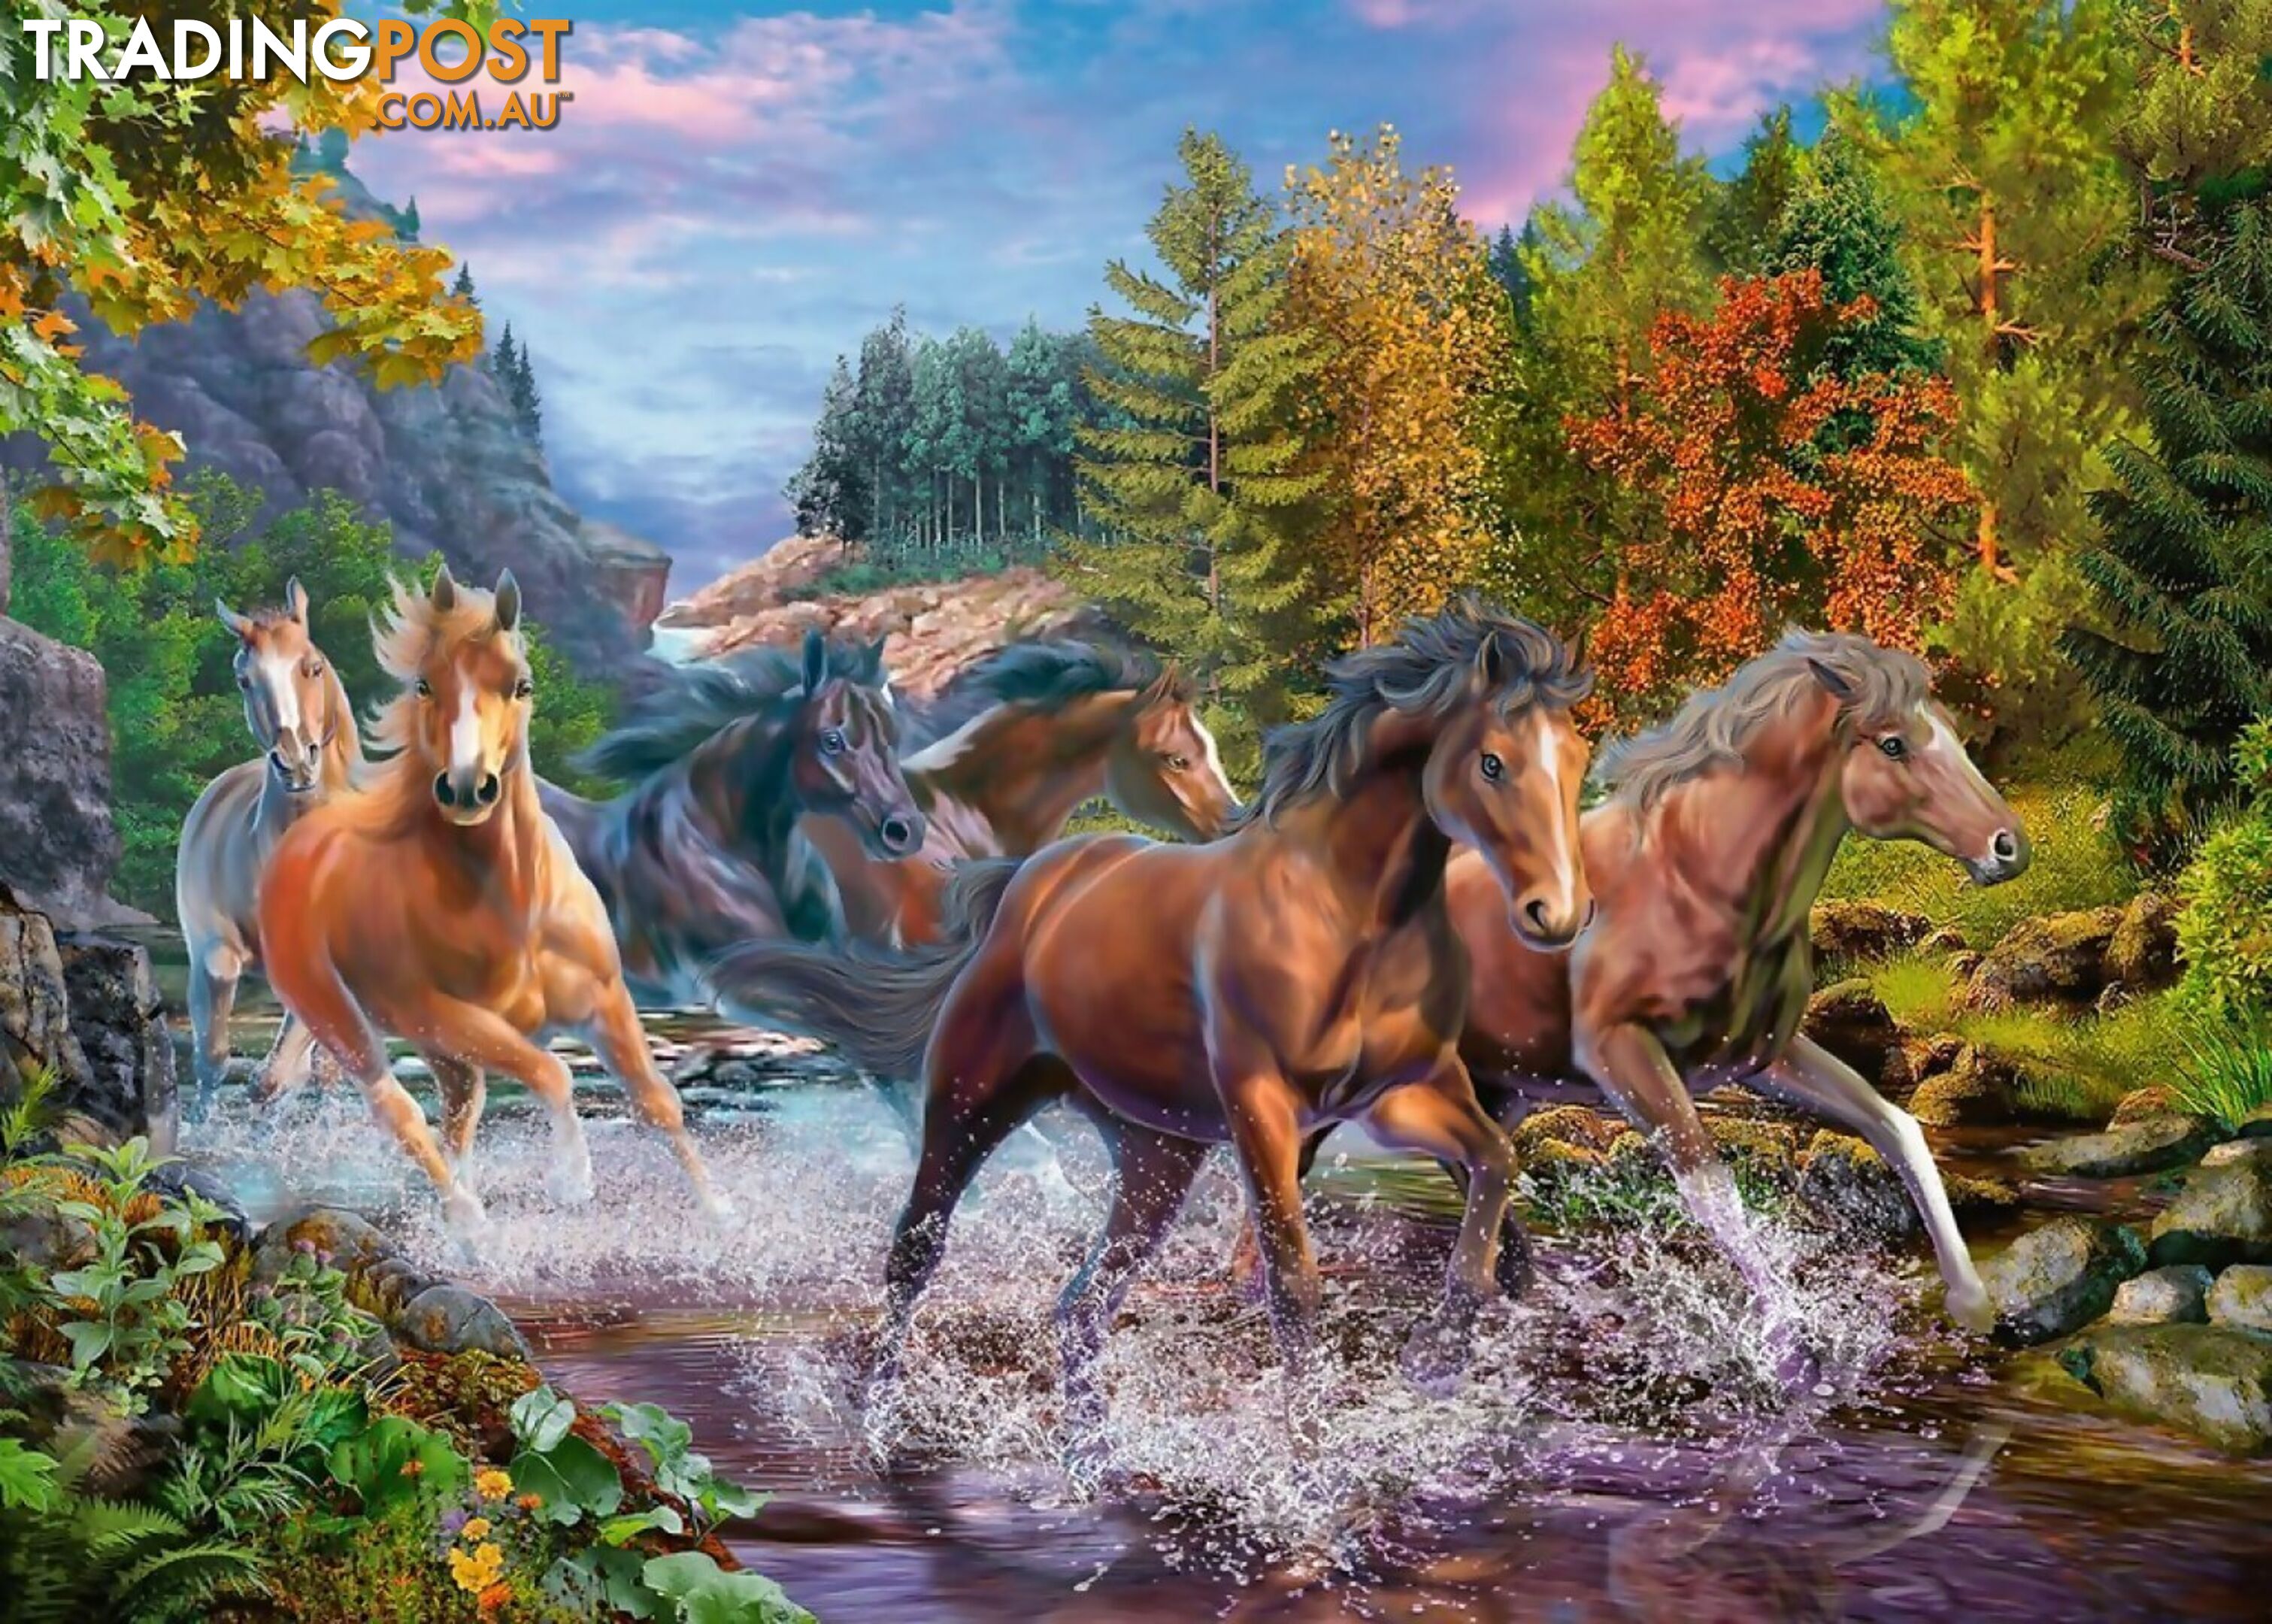 Ravensburger - Rushing River Horses Jigsaw Puzzle 100pc - Mdrb10403 - 4005556104031